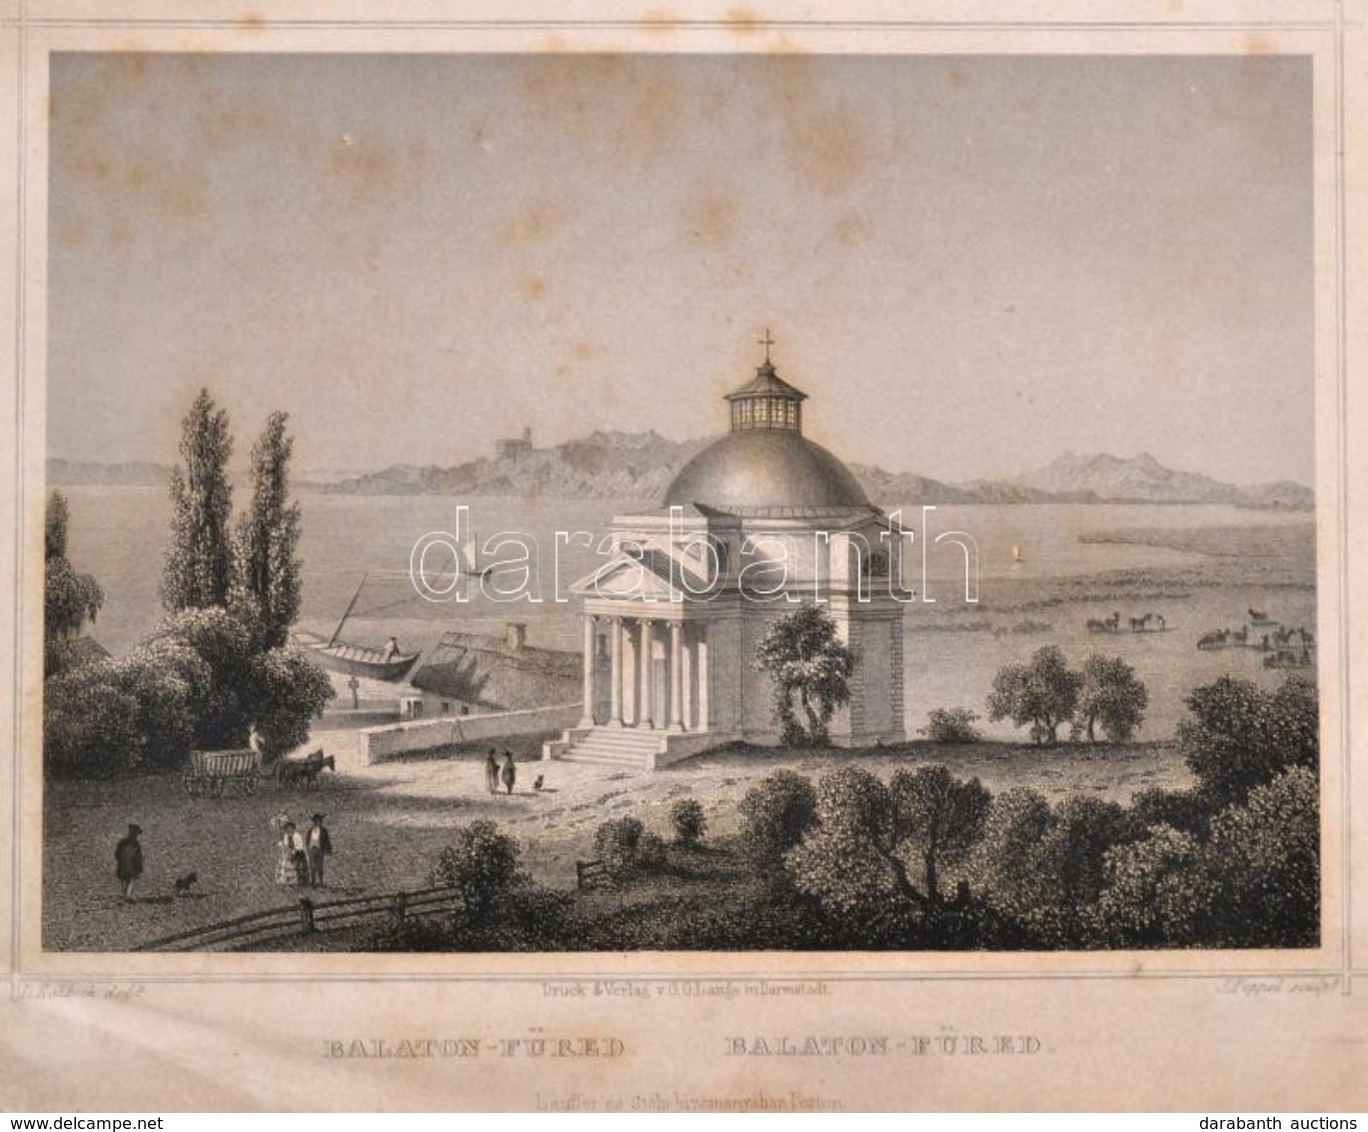 Cca 1860 Ludwig Rohbock (1820-1883) - Johann Poppel (1807-1882): Balatonfüred. Pest, Lauffer és Stolp, Acélmetszet, Jelz - Prints & Engravings